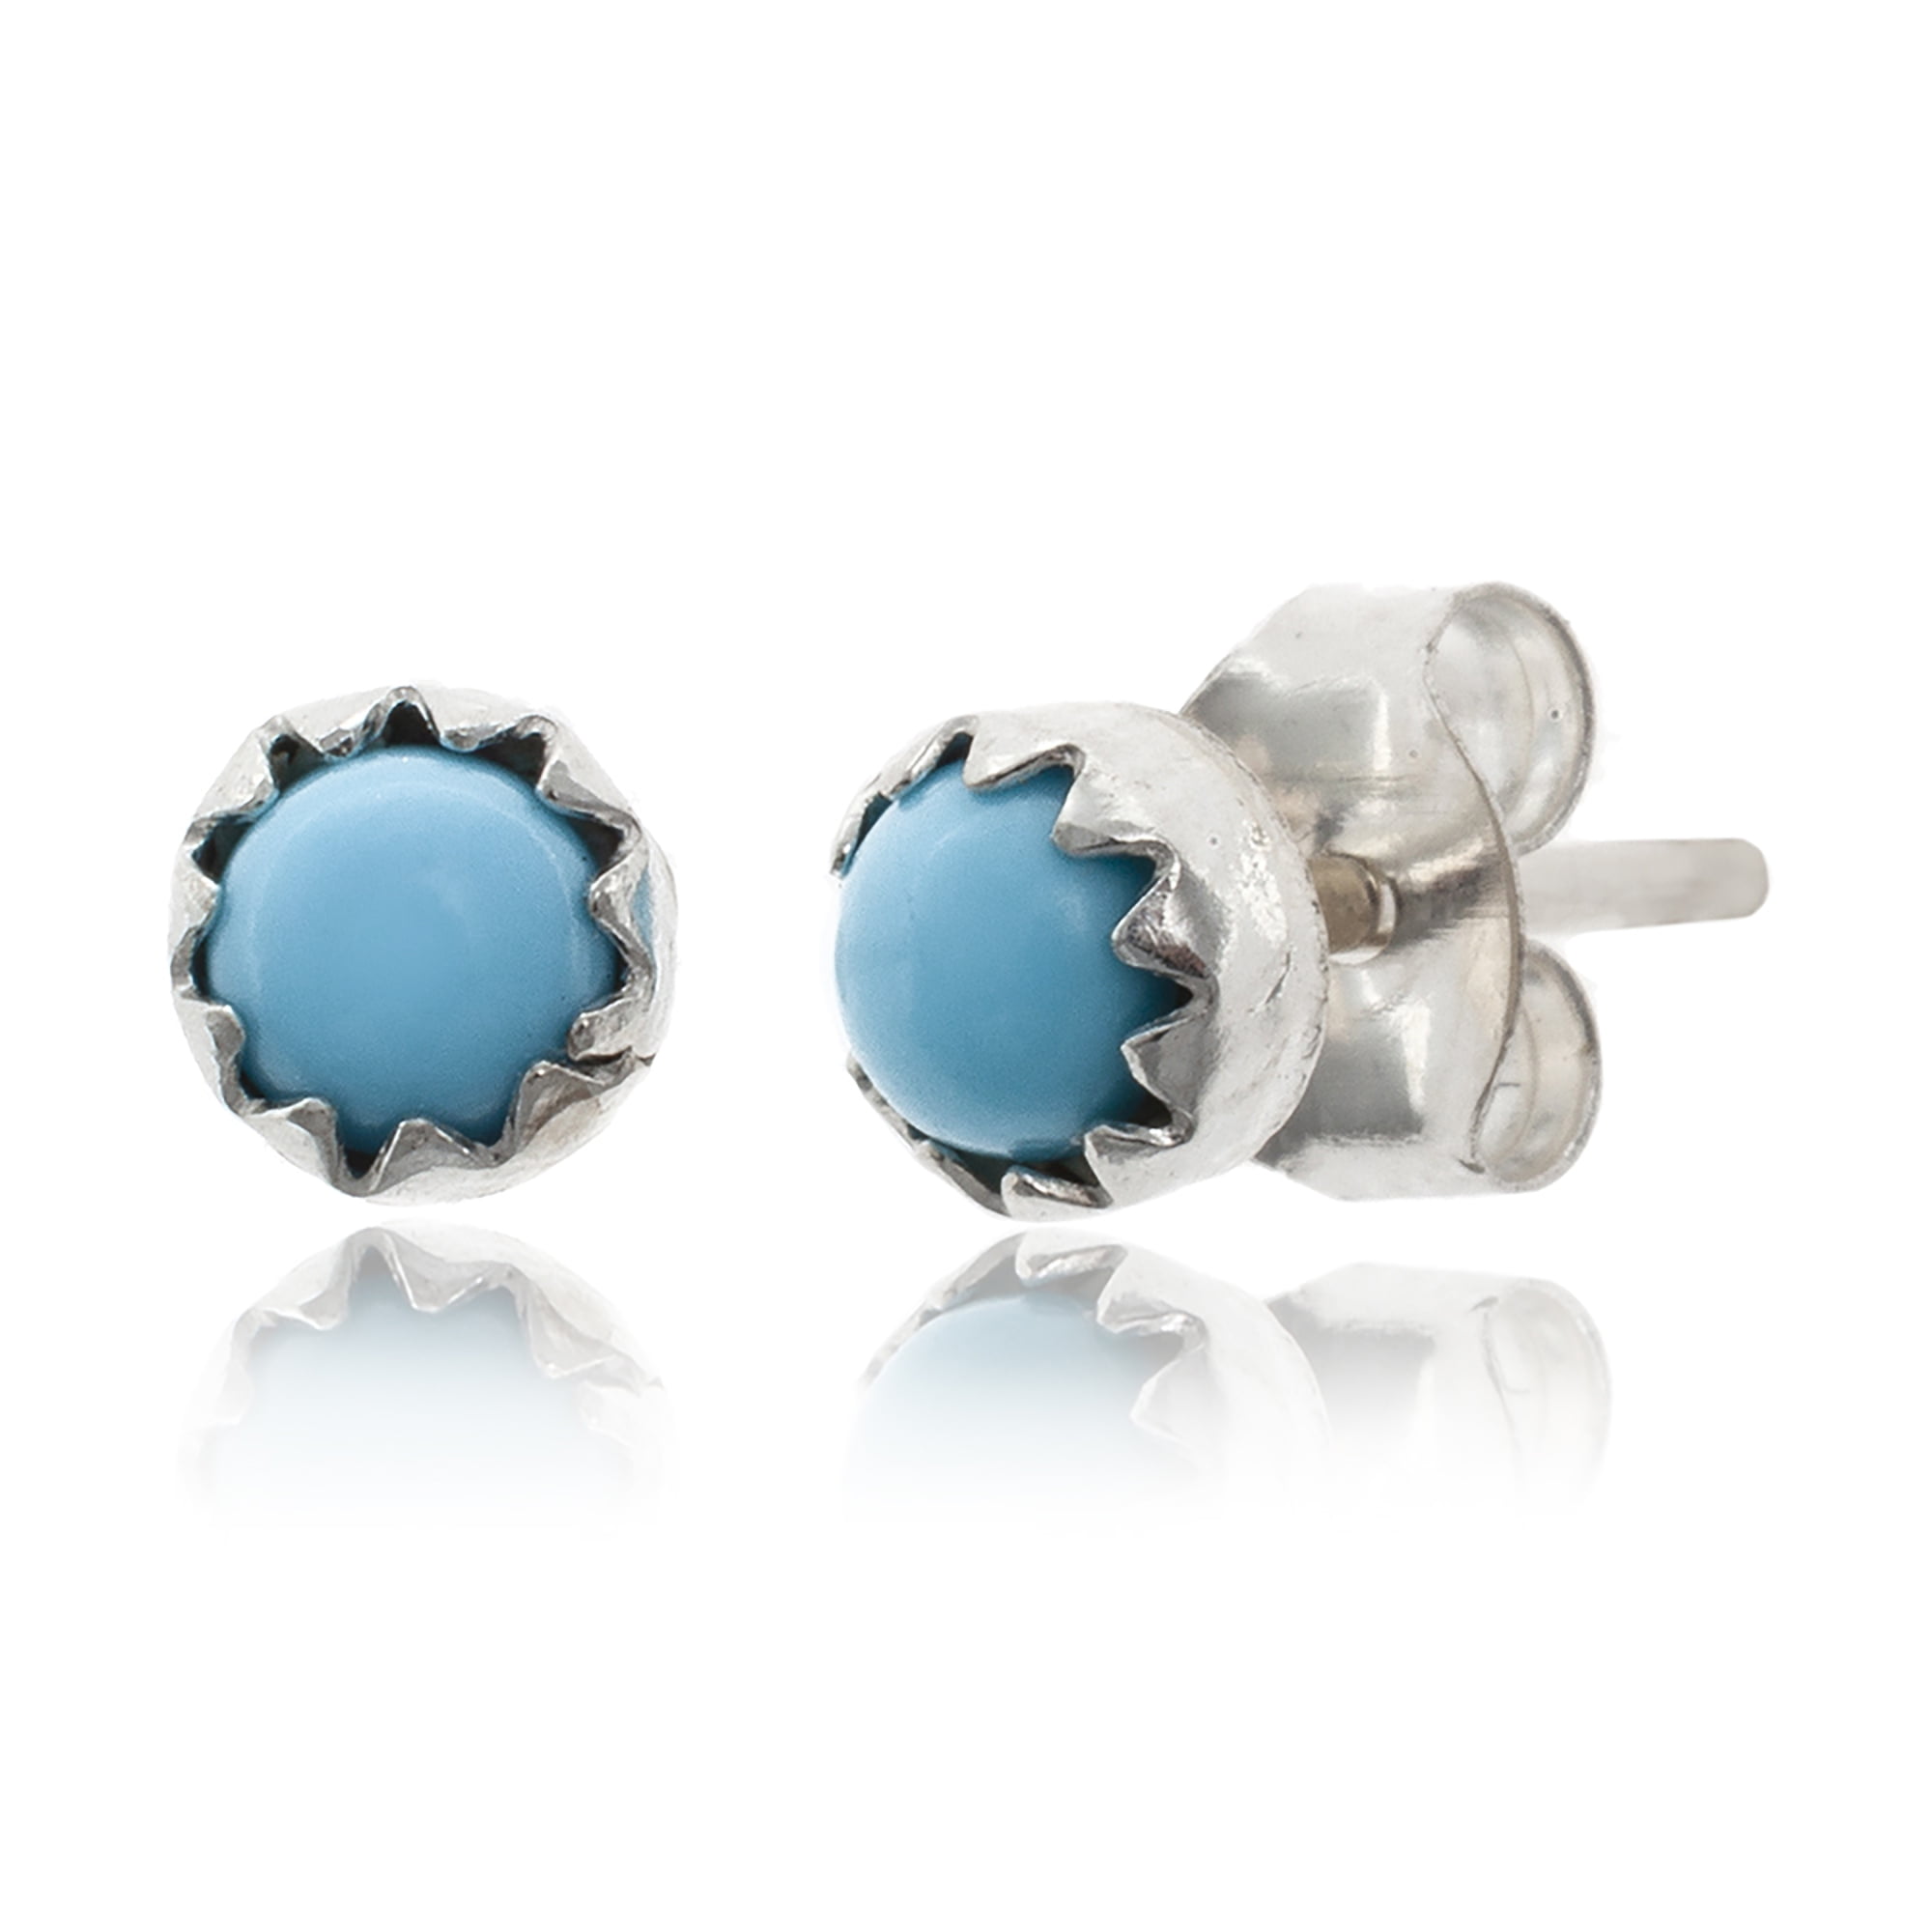 Turquoise 925 Sterling Silver Earrings Handmade Jewellery #1018-1